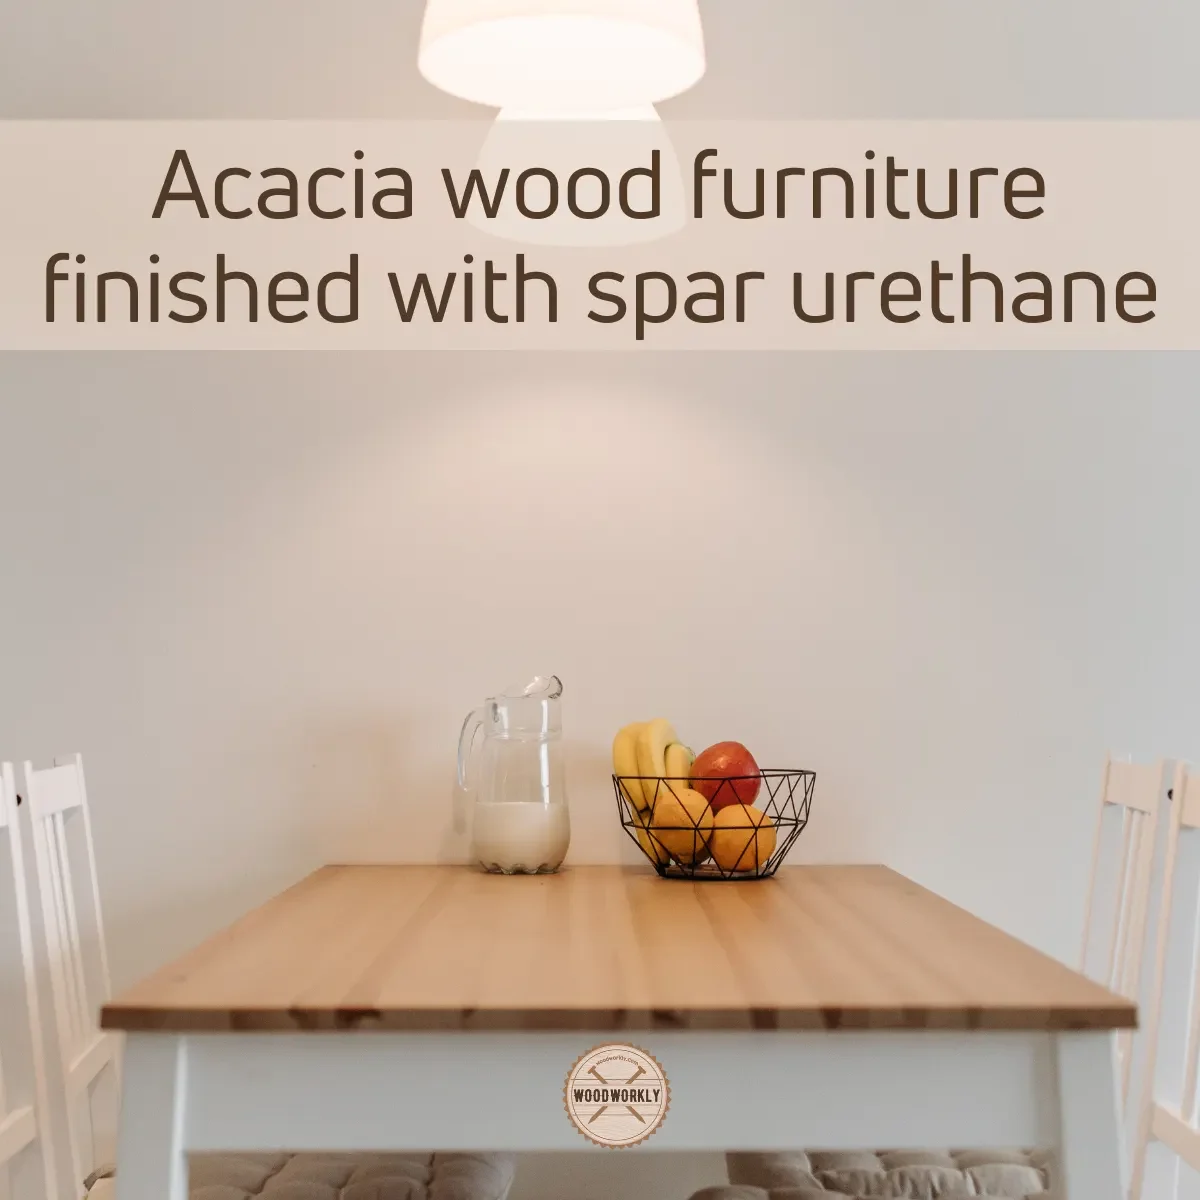 Acacia wood furniture finished with spar urethane